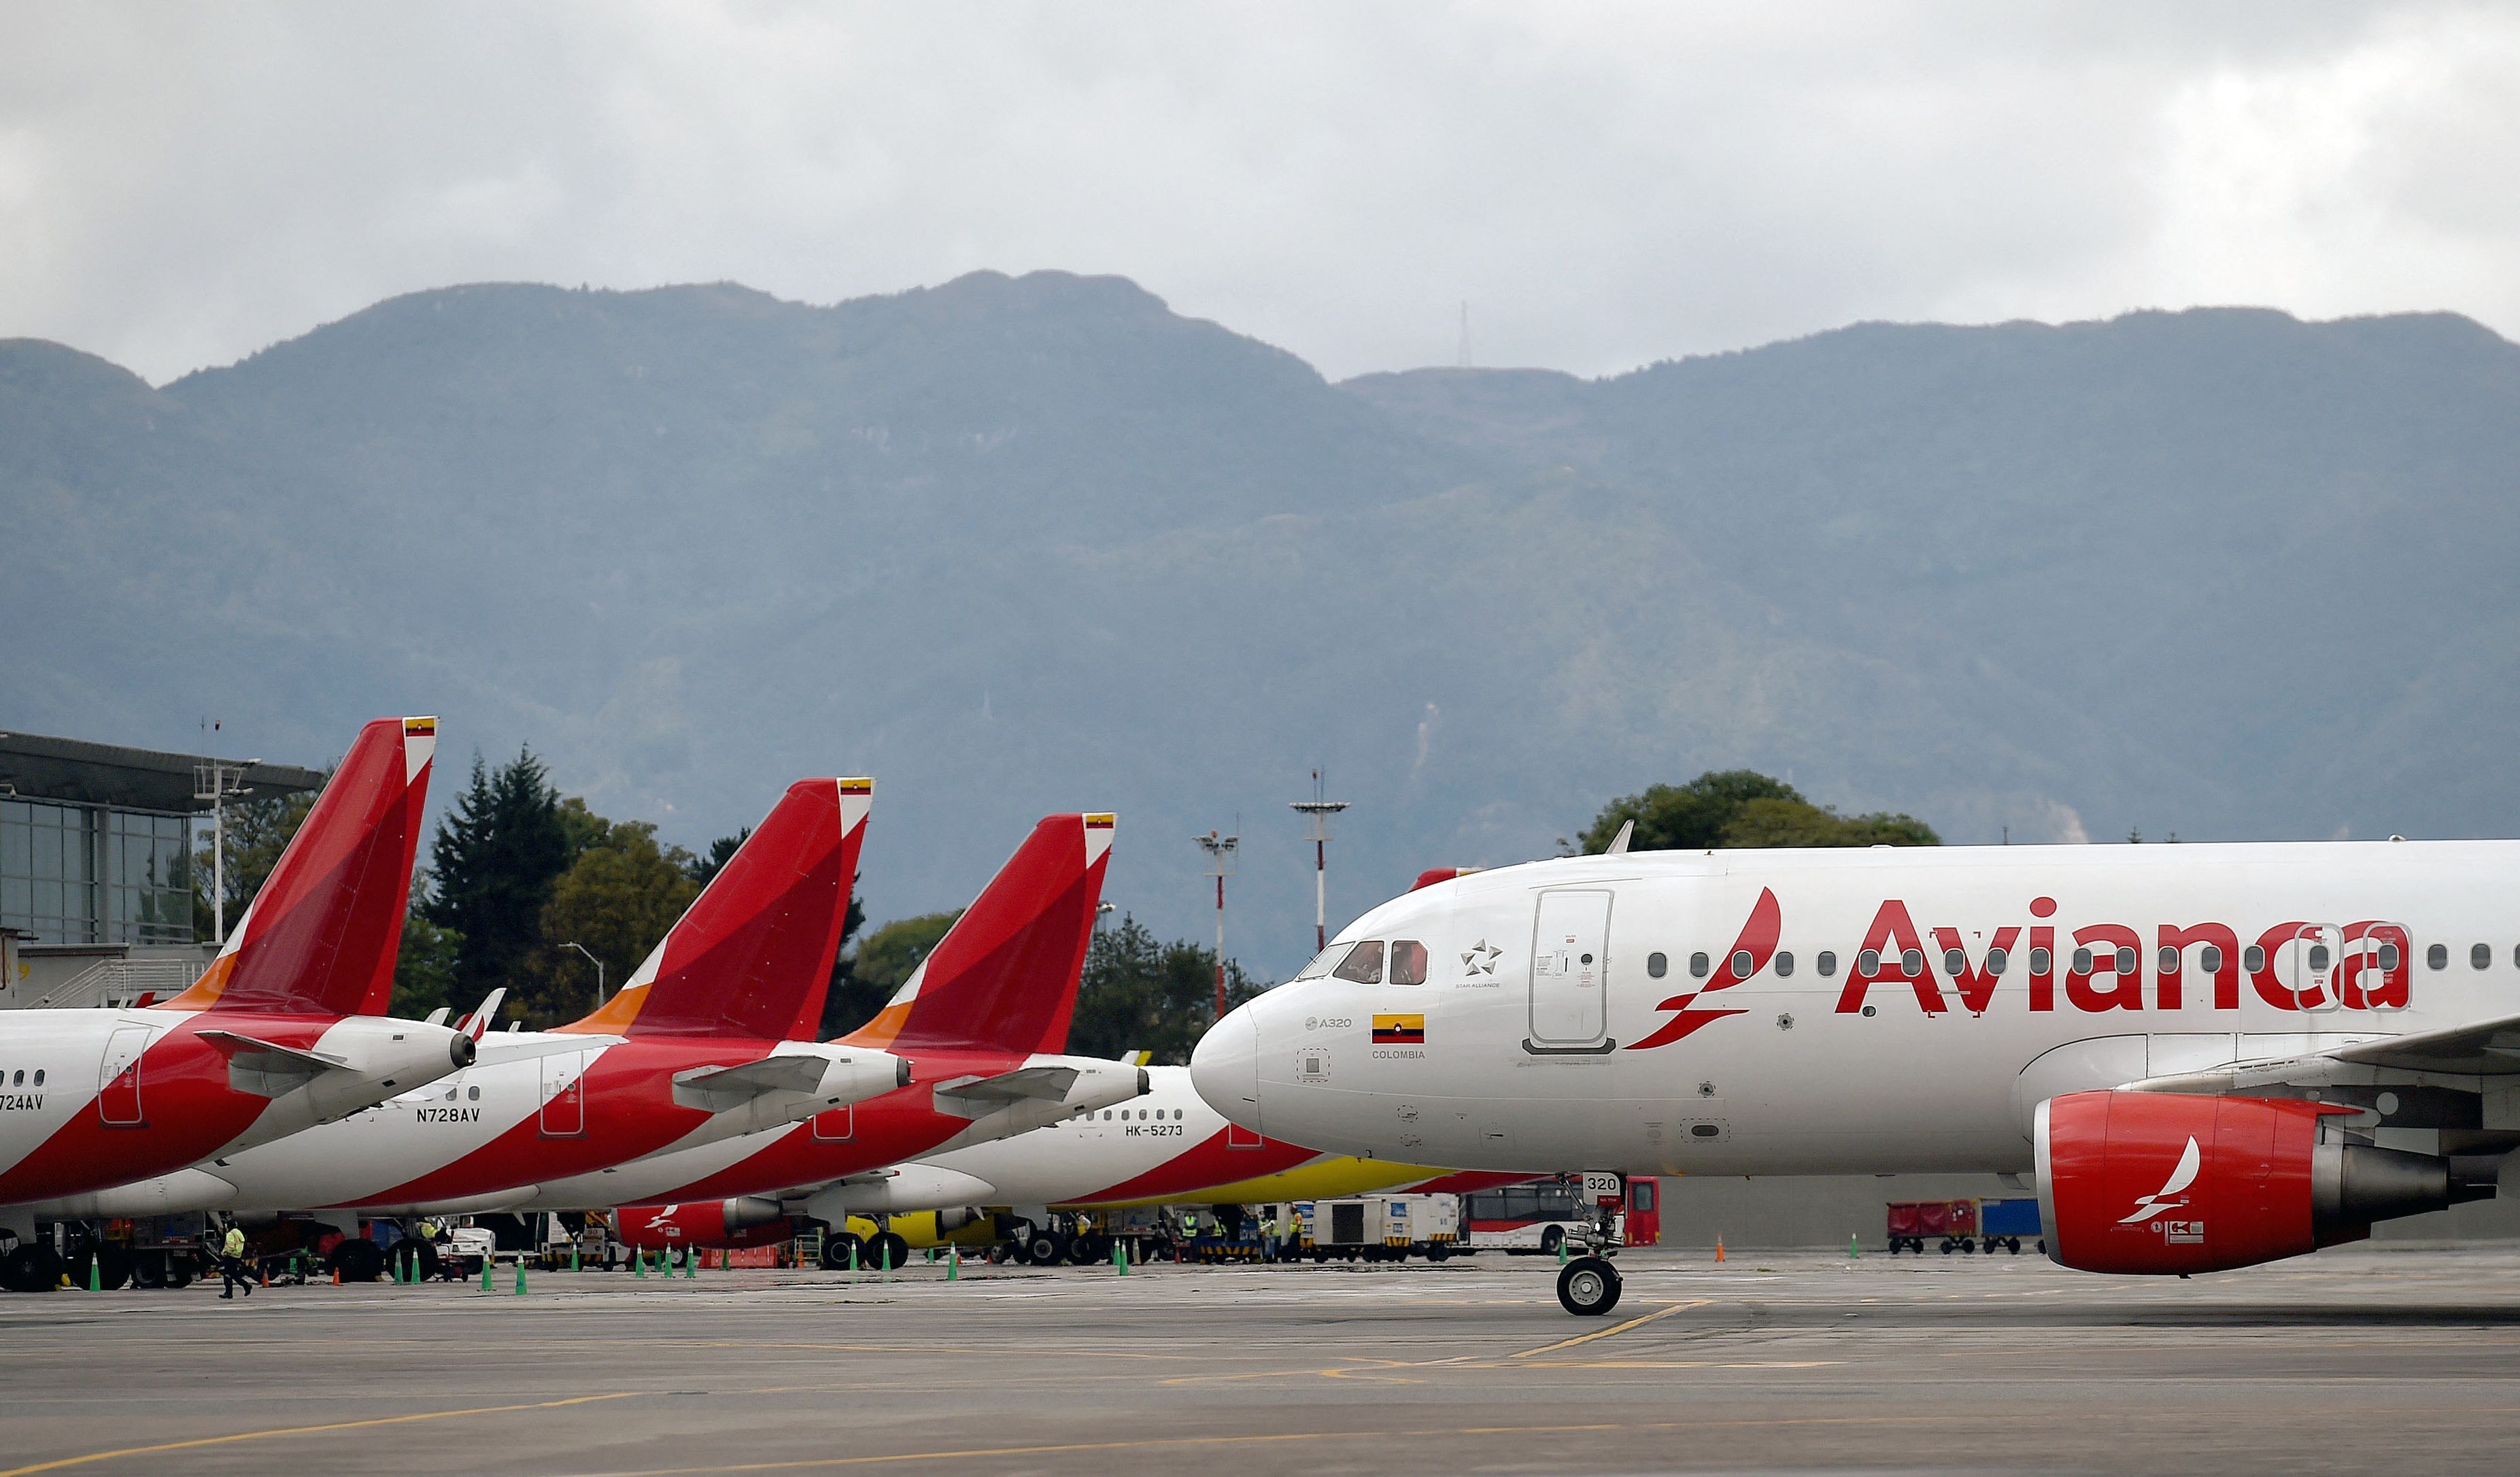 Avianca Aircraft at El Dorado International Airport